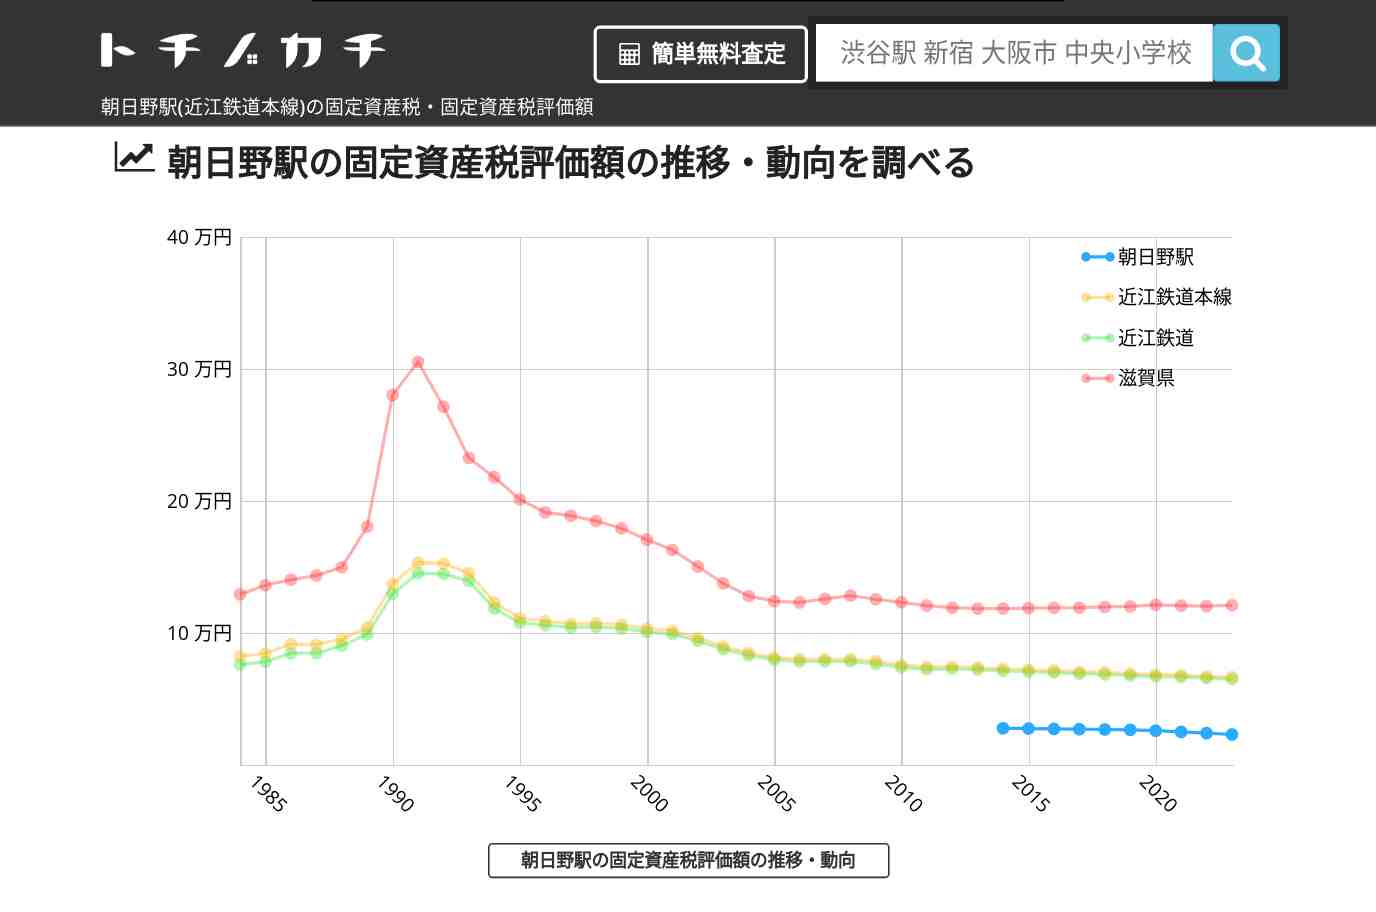 朝日野駅(近江鉄道本線)の固定資産税・固定資産税評価額 | トチノカチ